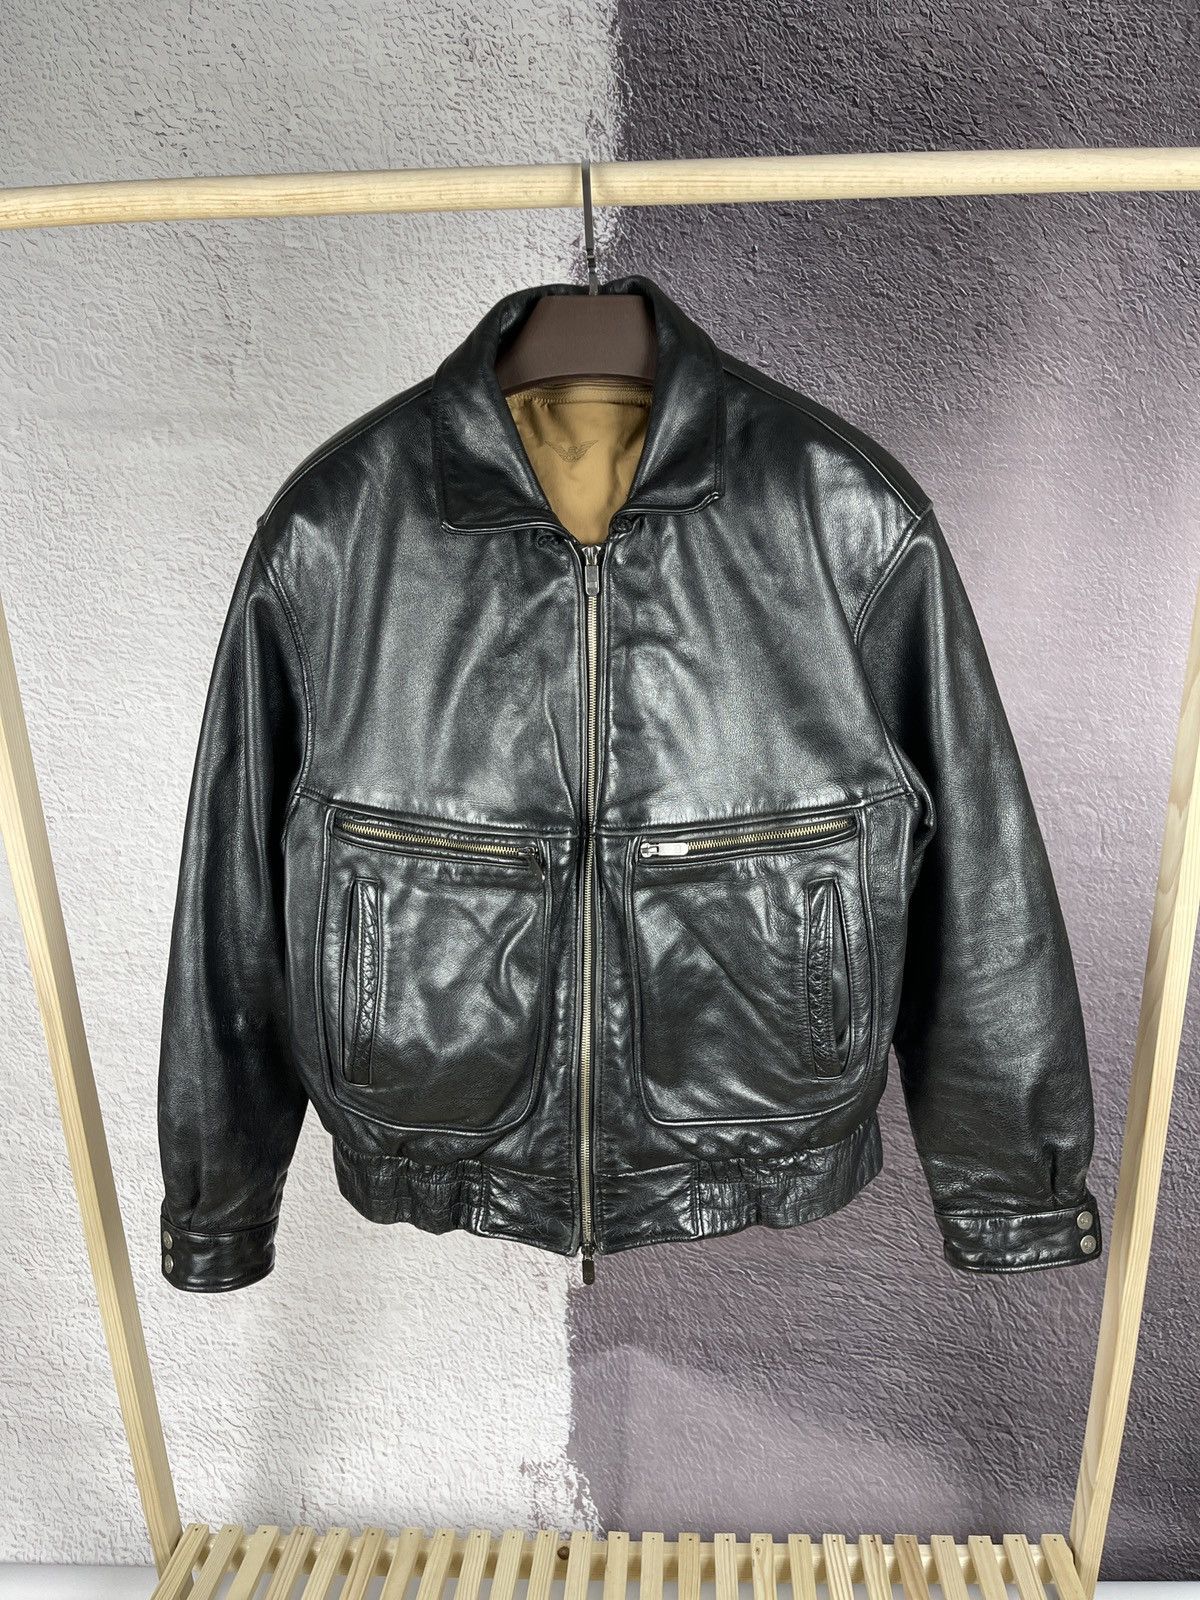 Vintage Emporio Armani autumn winter 97/98 vintage leather jacket | Grailed